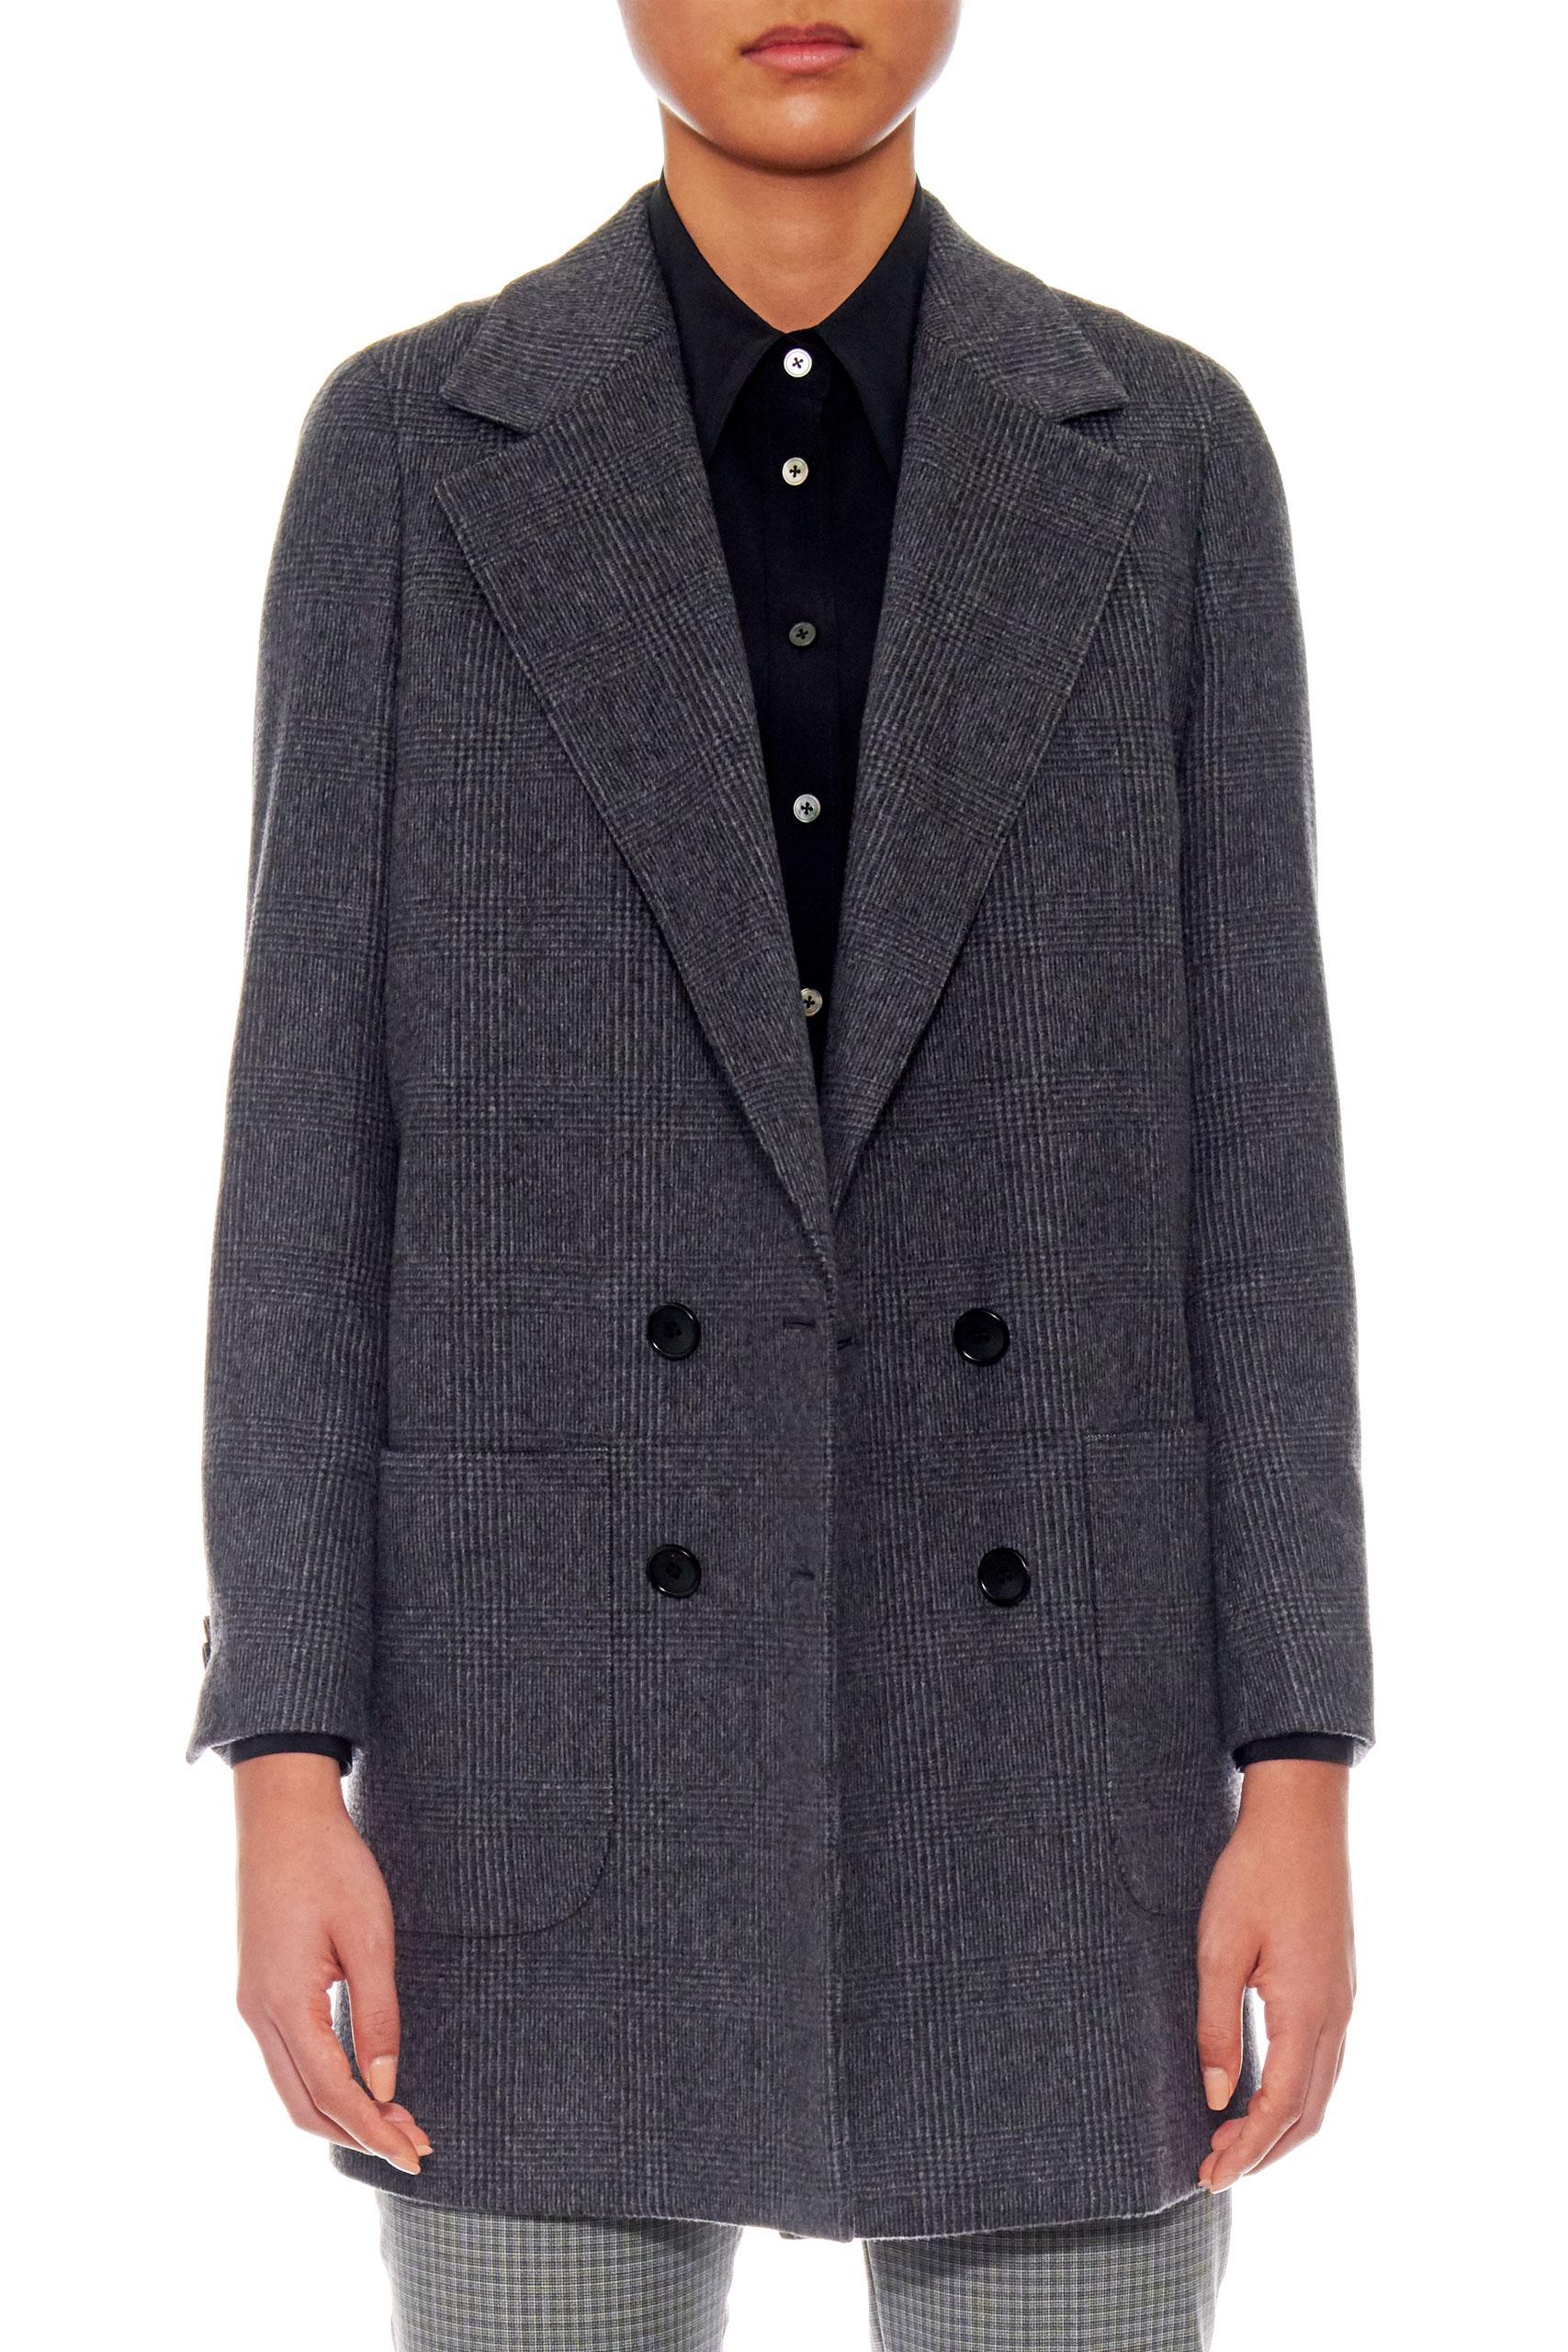 Saint-Etienne – Oversized wool jacket with patch pockets in dark grey